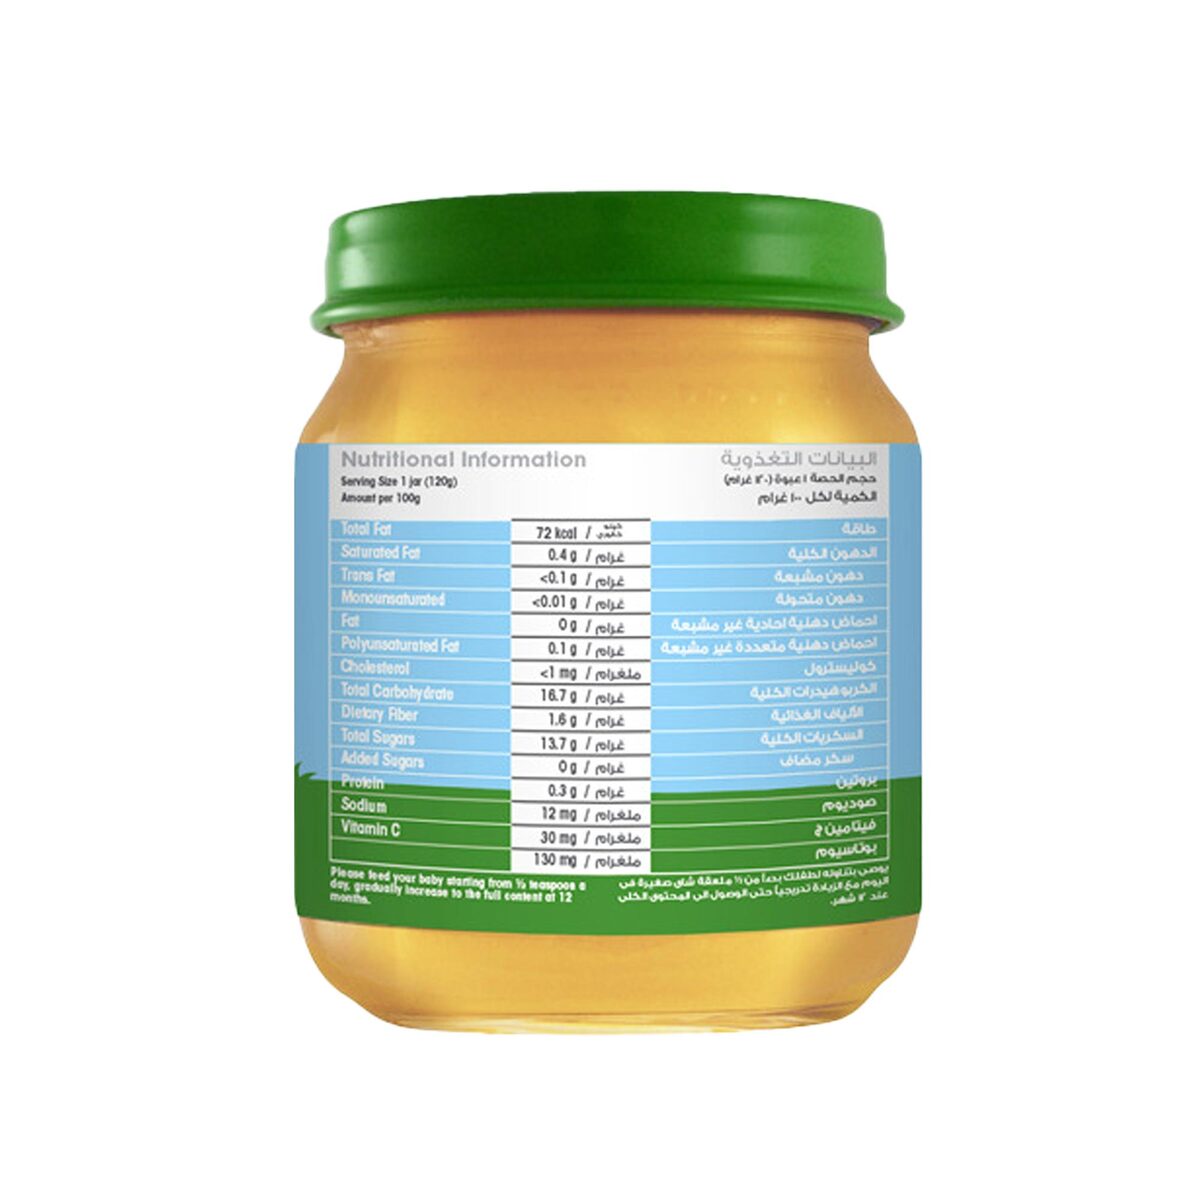 Heinz Baby Food Juicy Apple Puree Jar For 6+ Months 120g